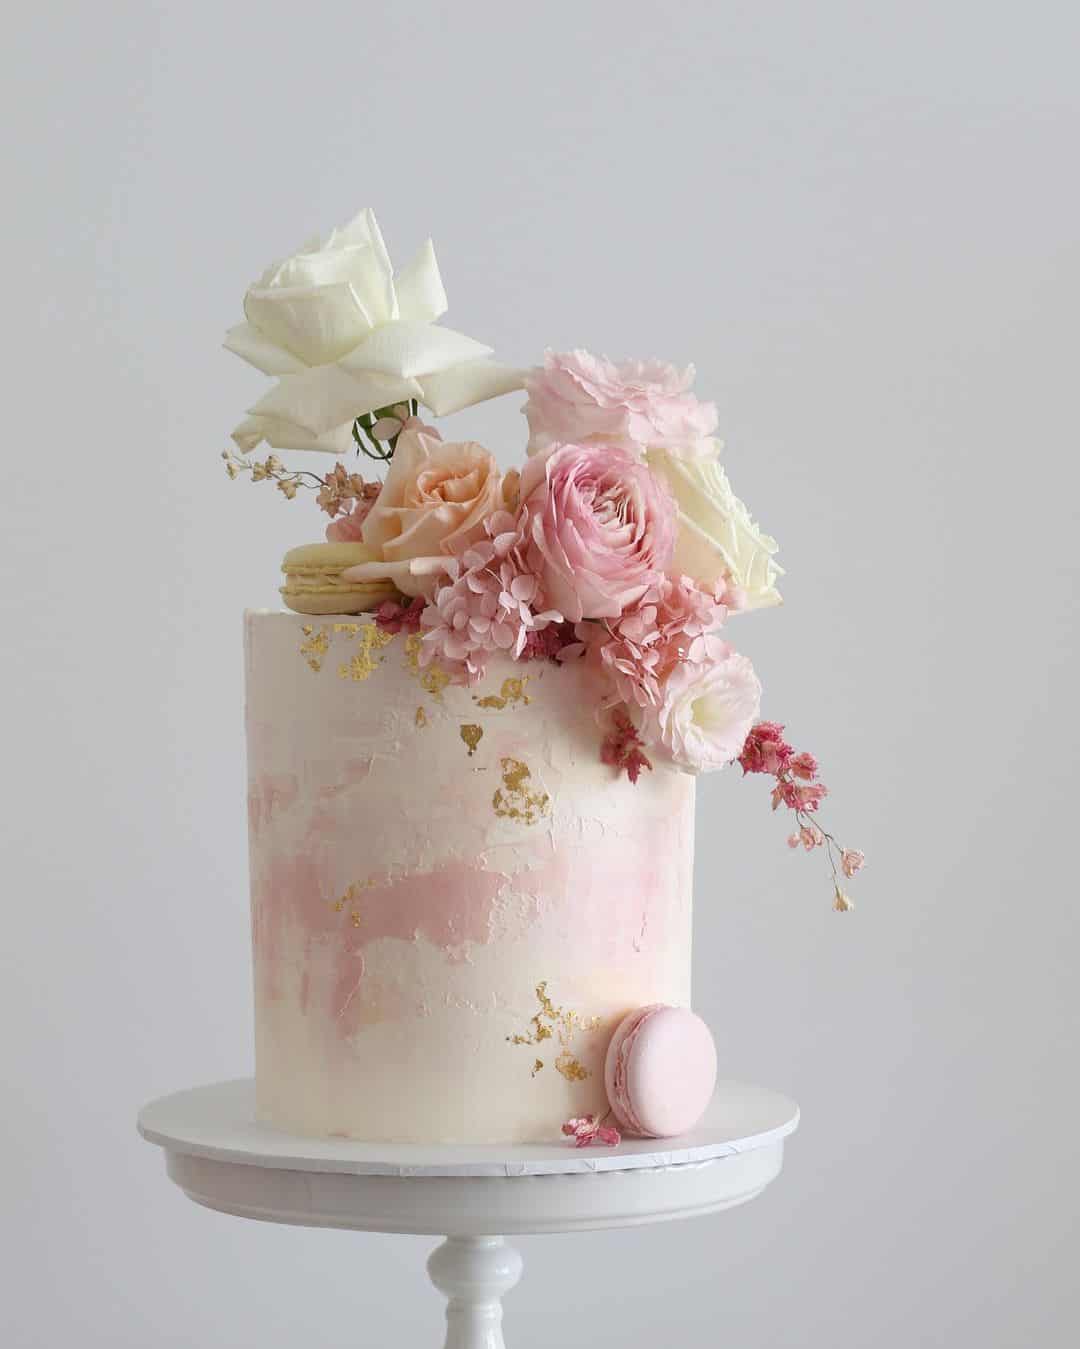 Award-winning Cake Designer Creates Elegant and Unique Wedding Cakes ...